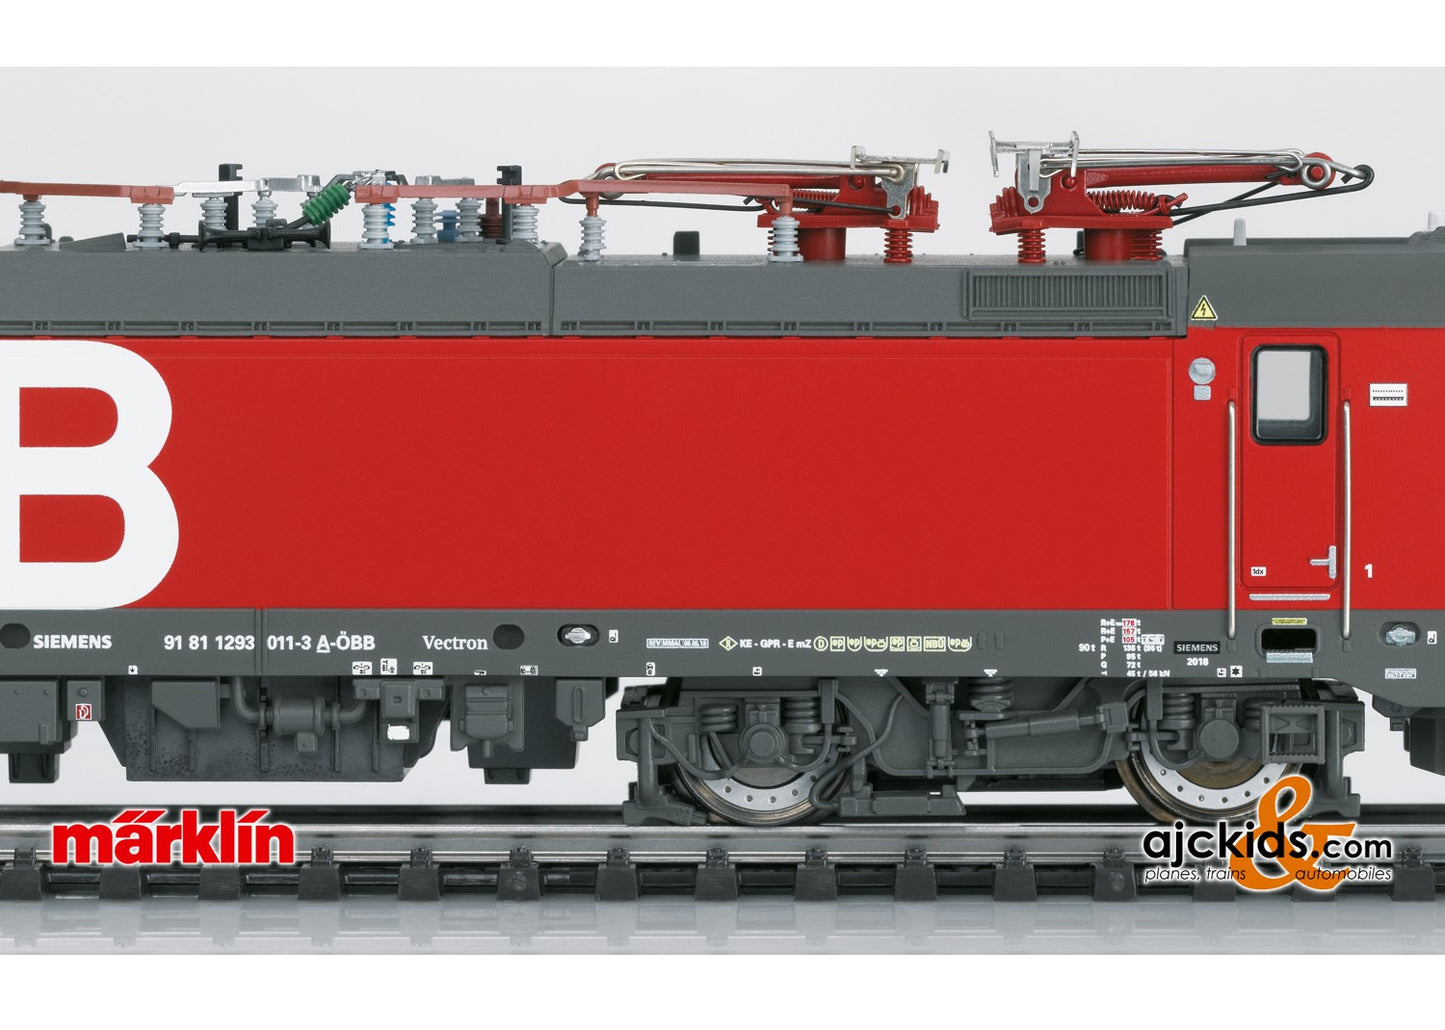 Marklin 39198 - Class 1293 Electric Locomotive Vectron at Ajckids.com